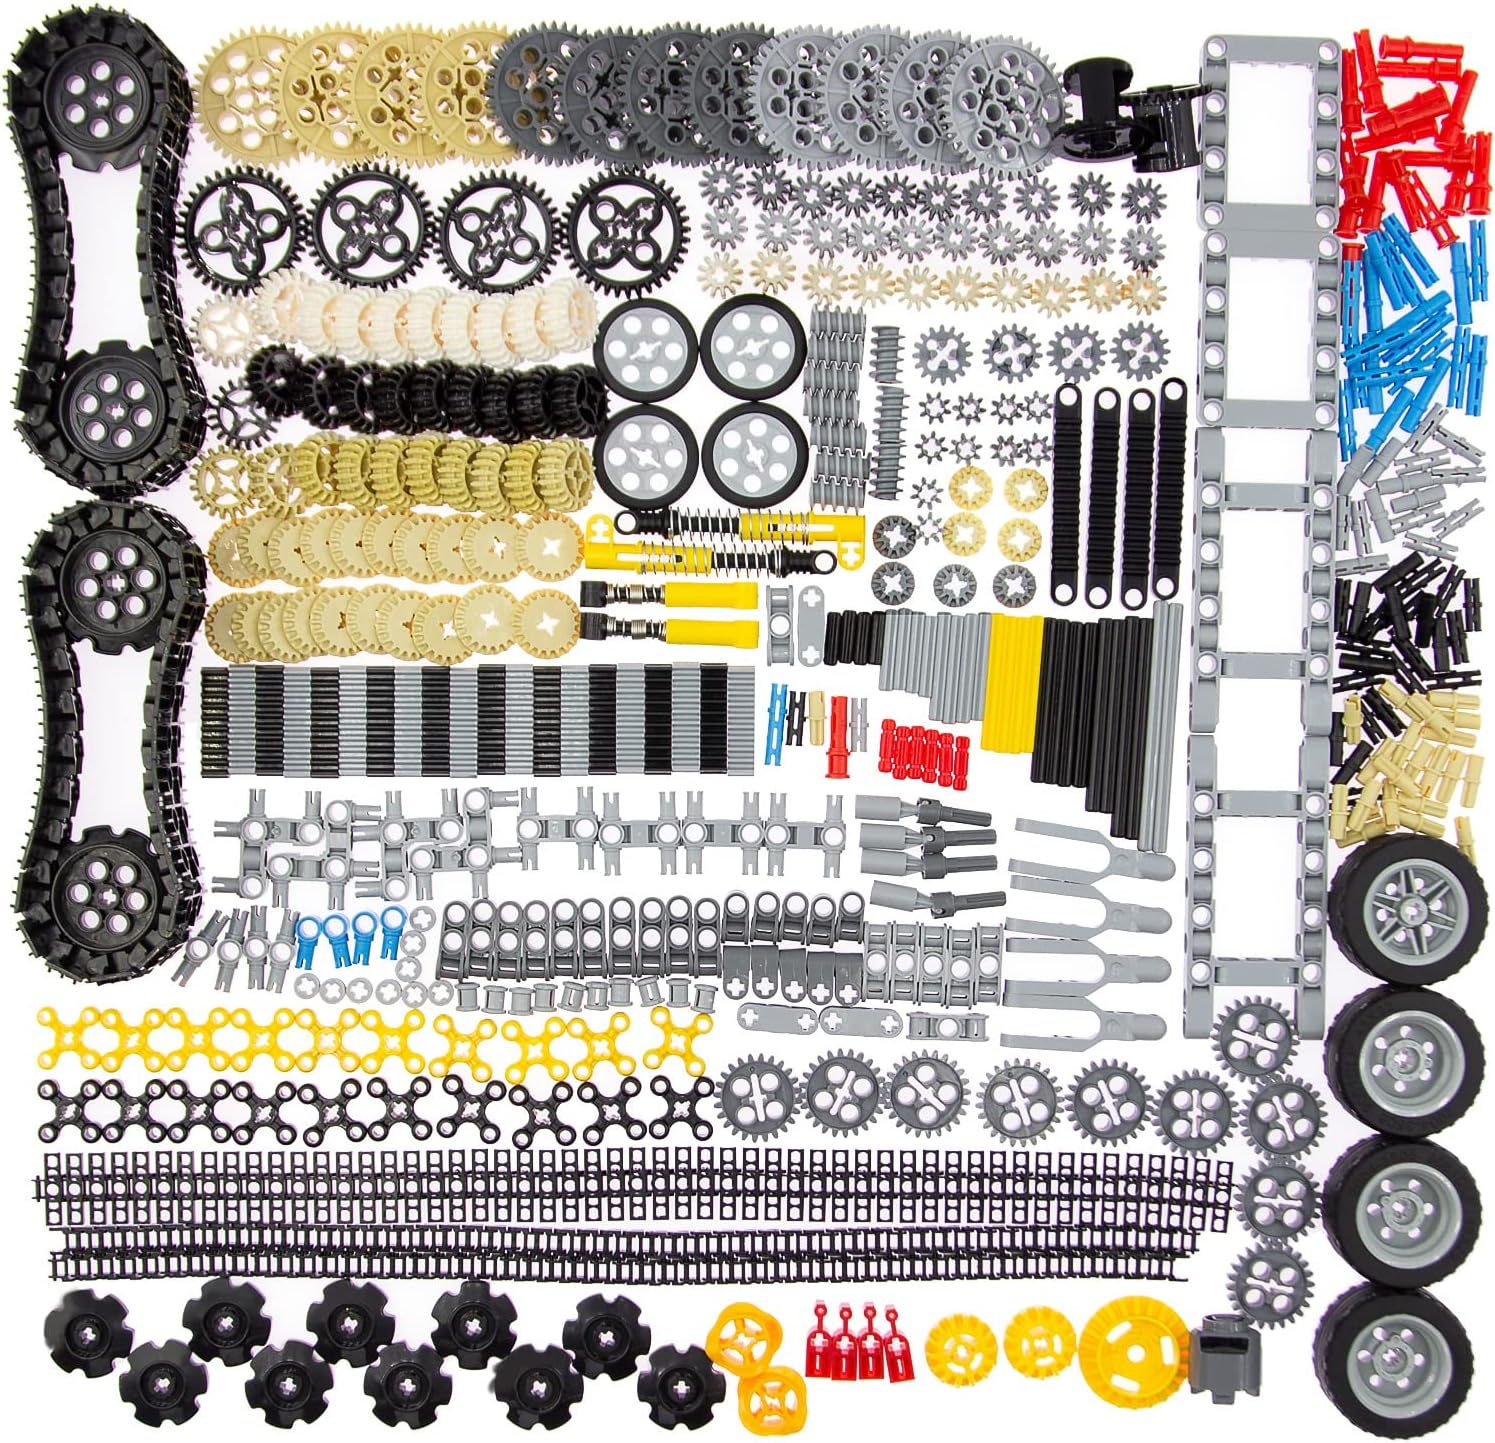 Seemey 844Pcs Technic Parts Gears Axles Sets, Compatible with Lego Bricks